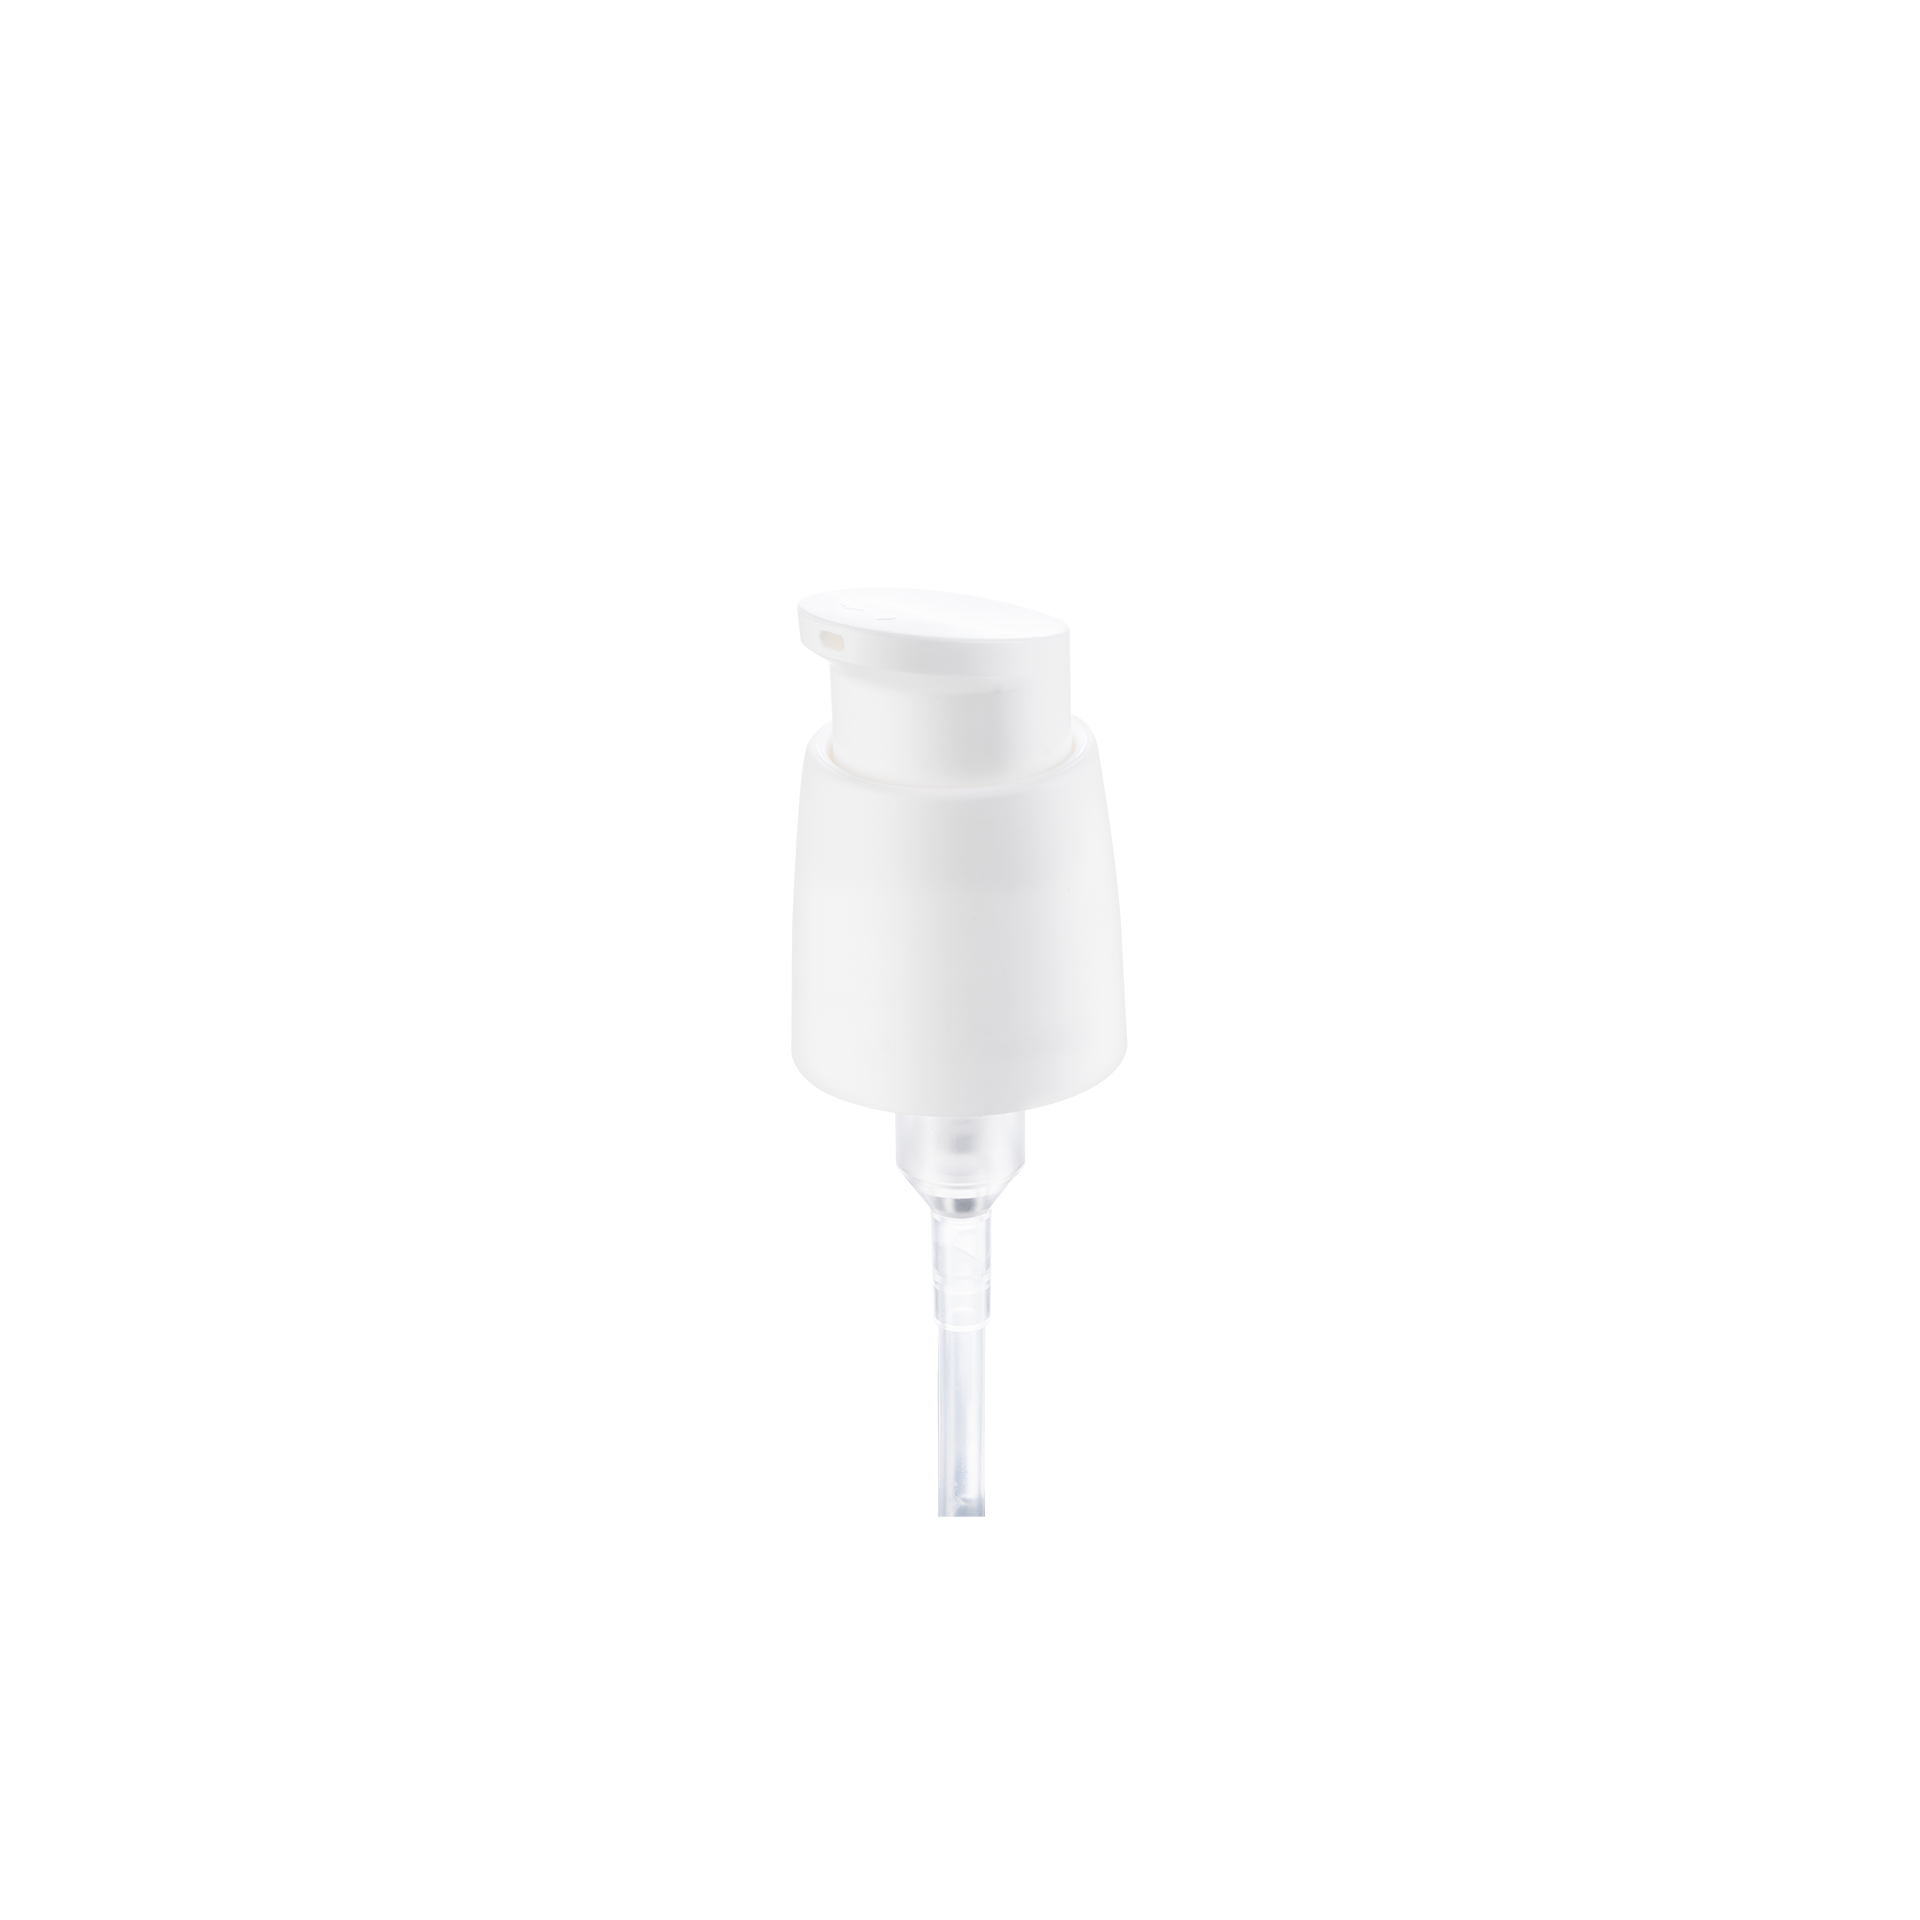 Lotion pump Cremosa 24/410, PP, white, matte finish, dose 0.28ml, twist-lock (Laurel 50)